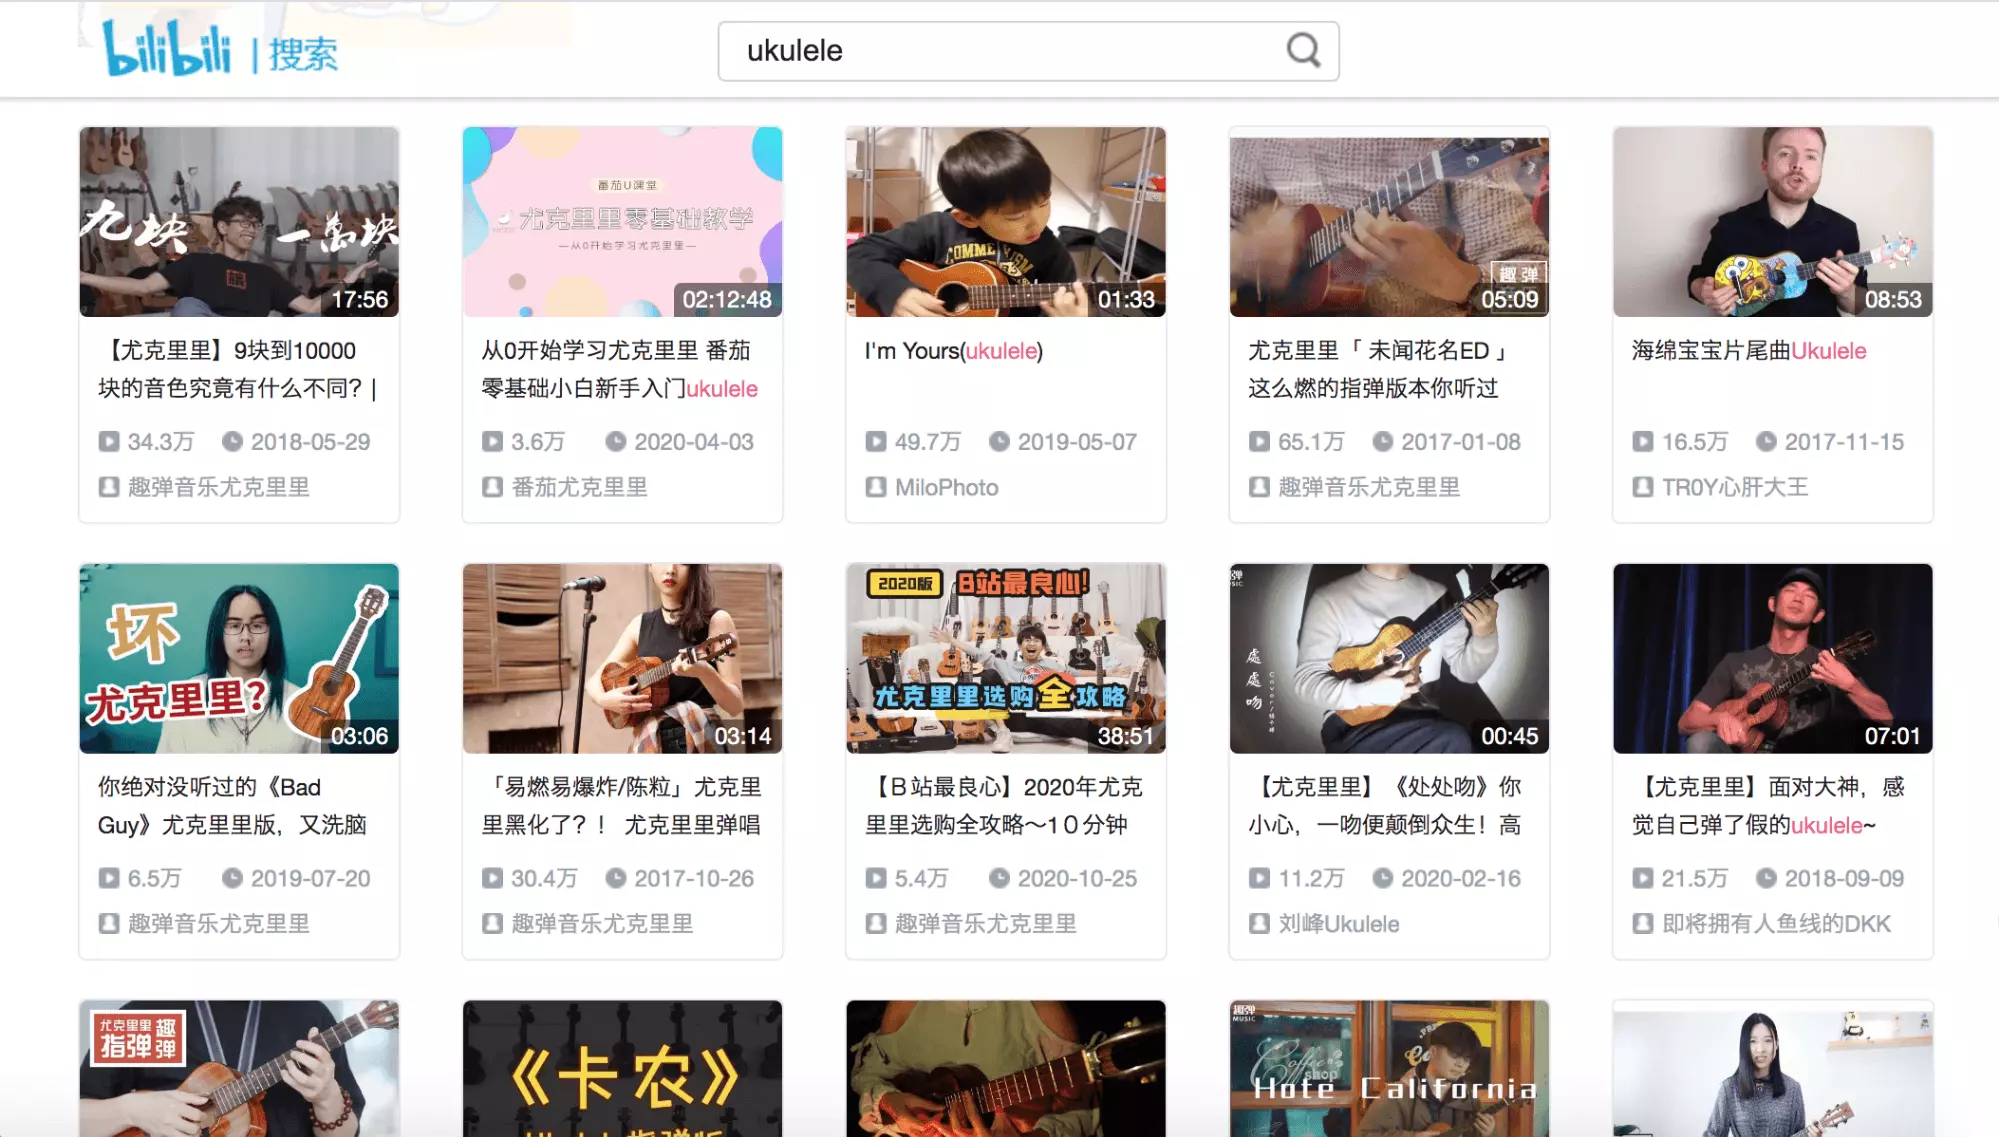 Bilibili - китайская видеоплатформа